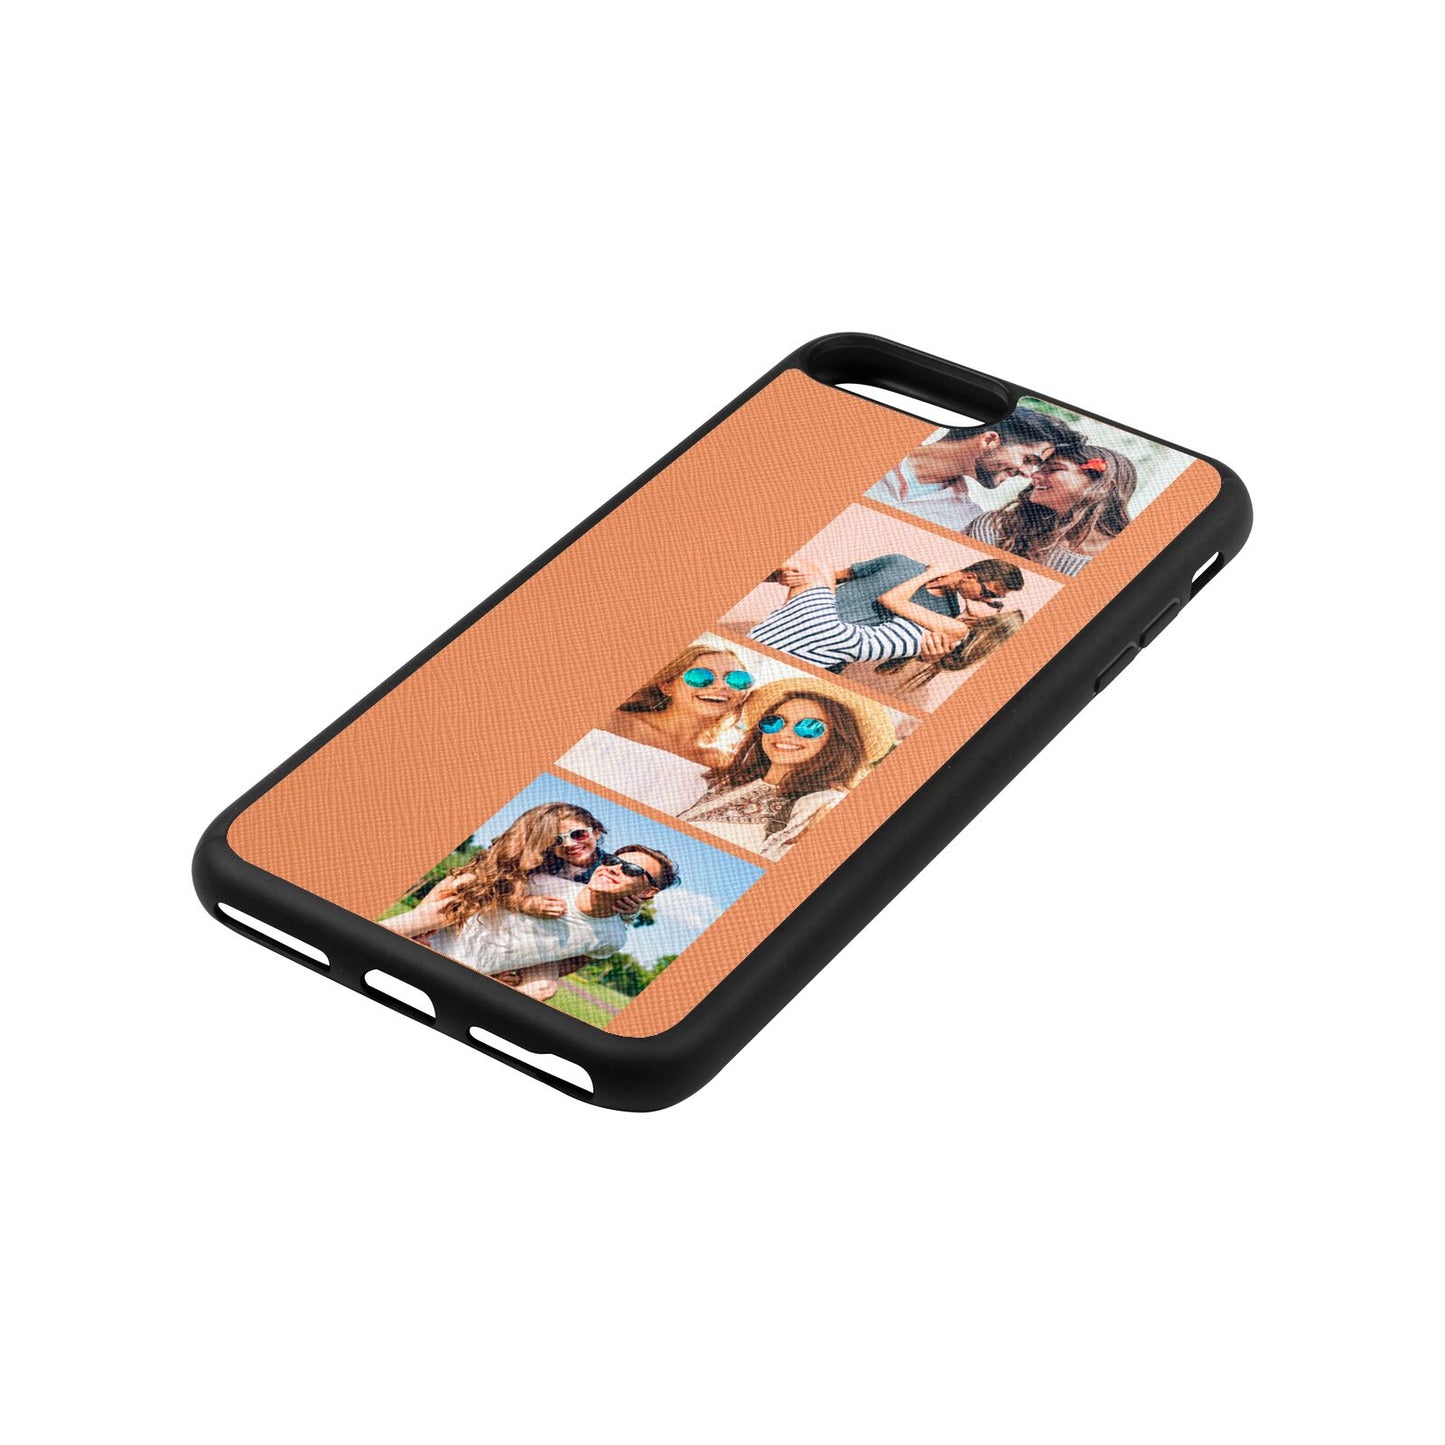 Photo Strip Montage Upload Orange Saffiano Leather iPhone 8 Plus Case Side Angle